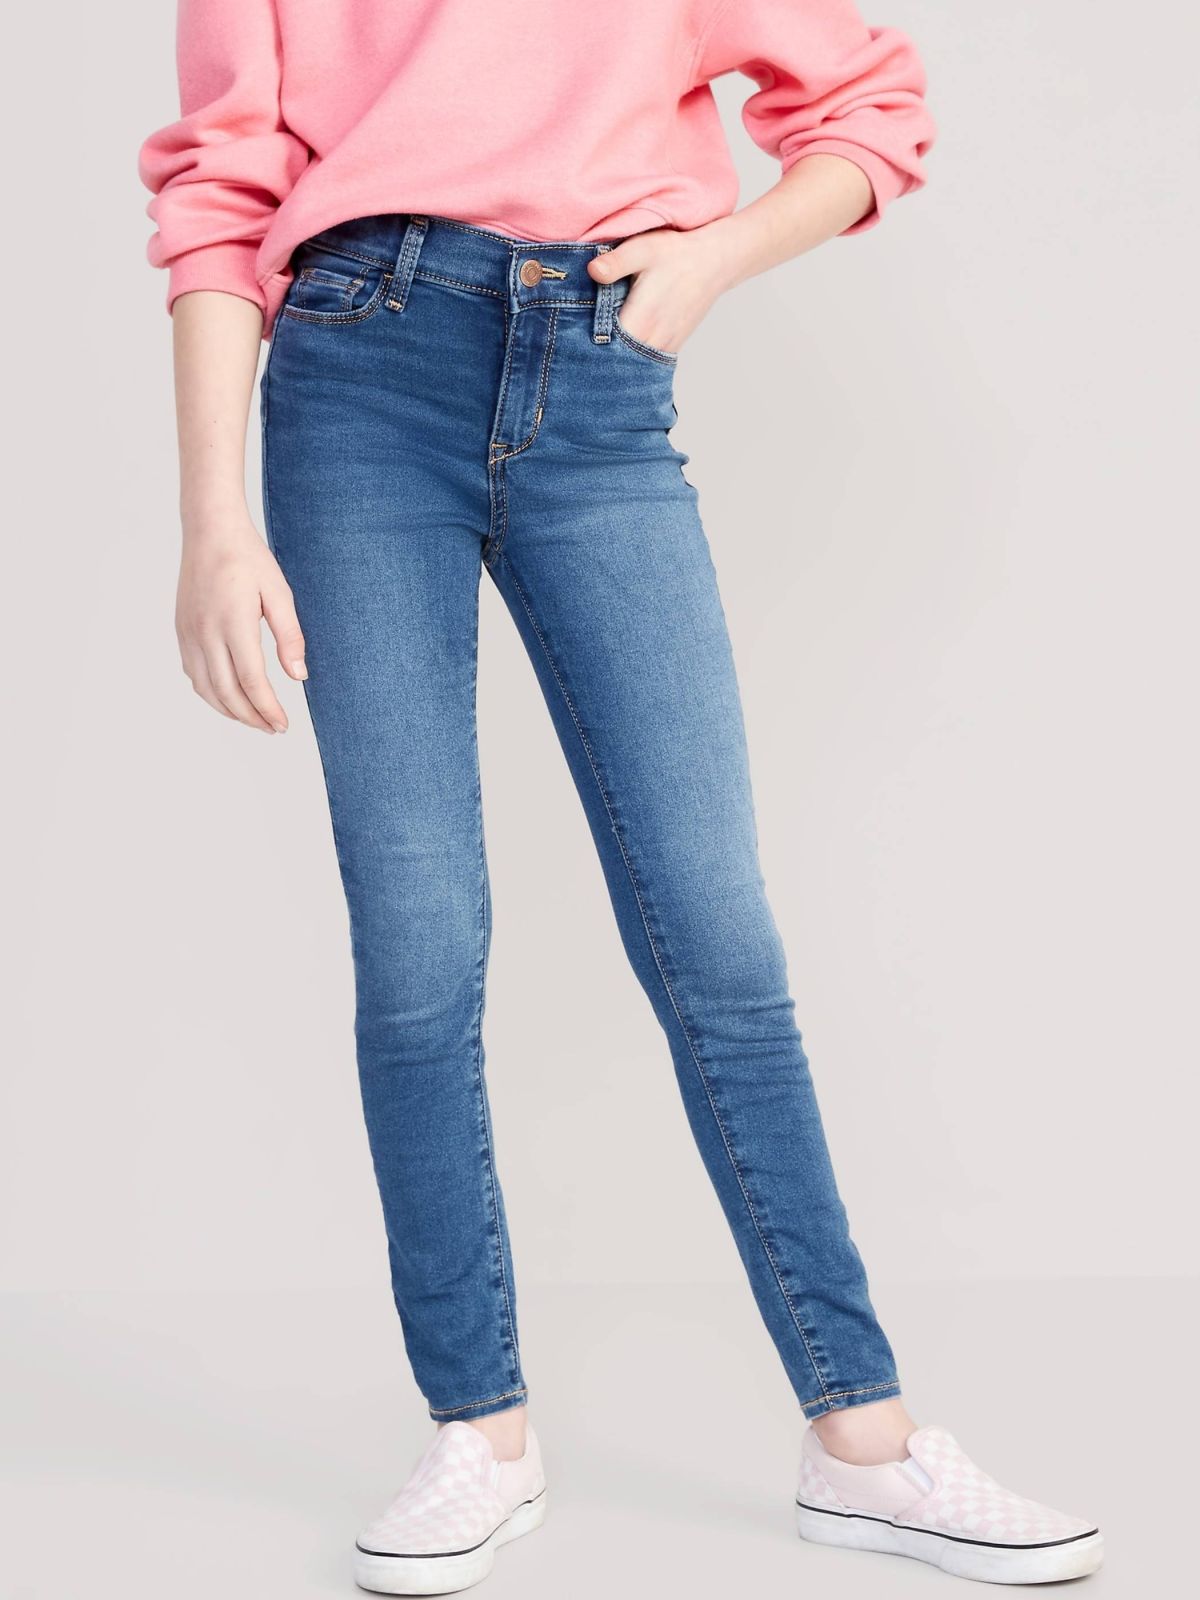  ג'ינס בגזרת סקיני של OLD NAVY